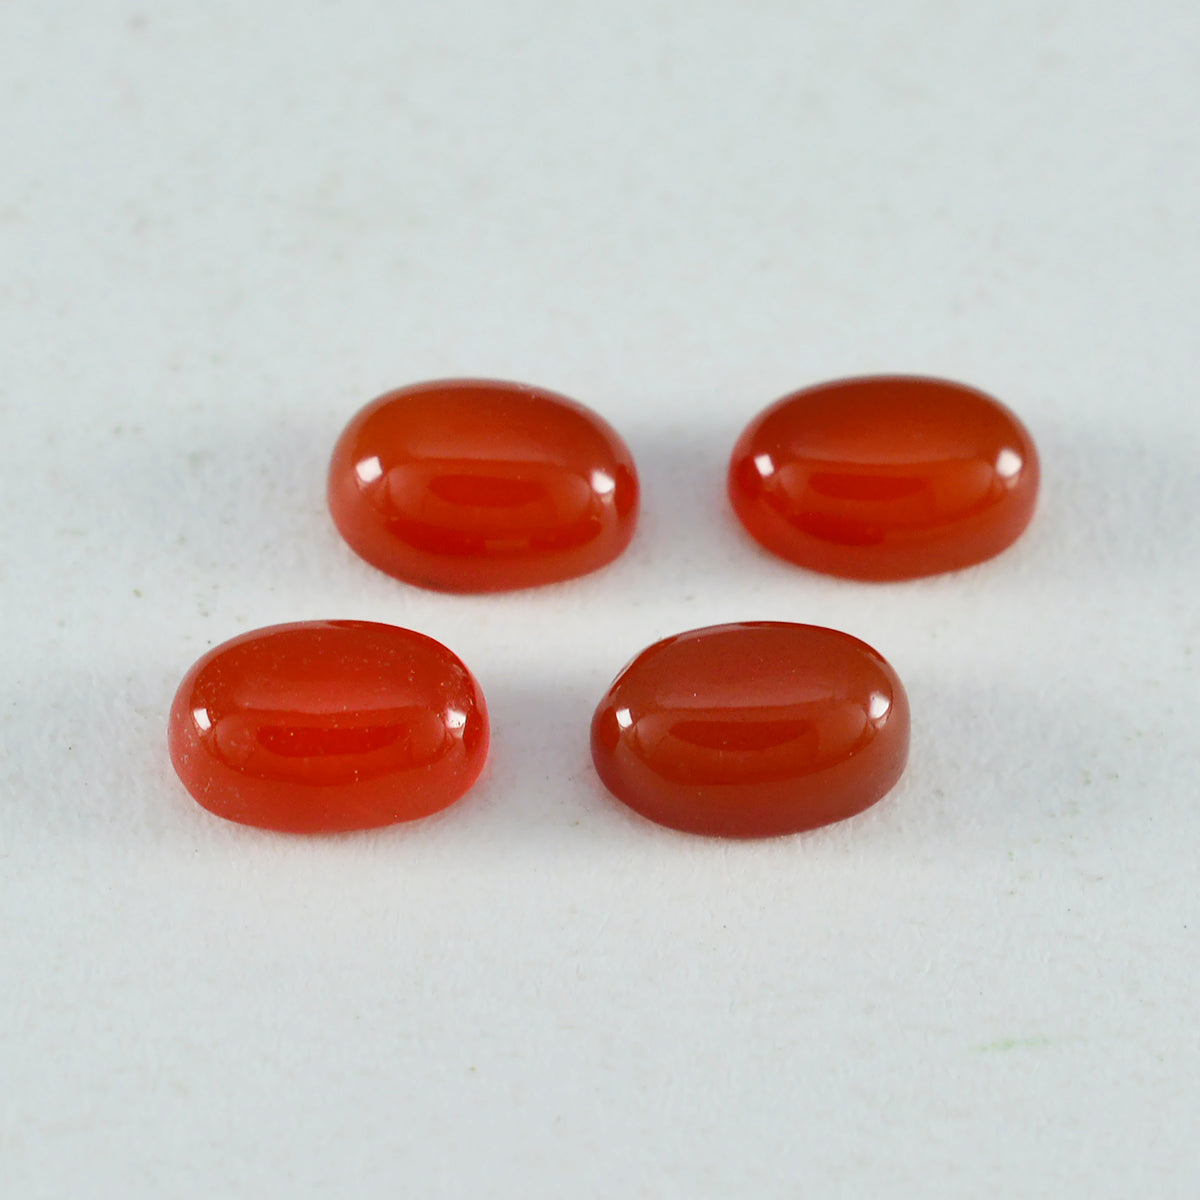 Riyogems 1PC rode onyx cabochon 7x9 mm ovale vorm A+ kwaliteit losse edelsteen